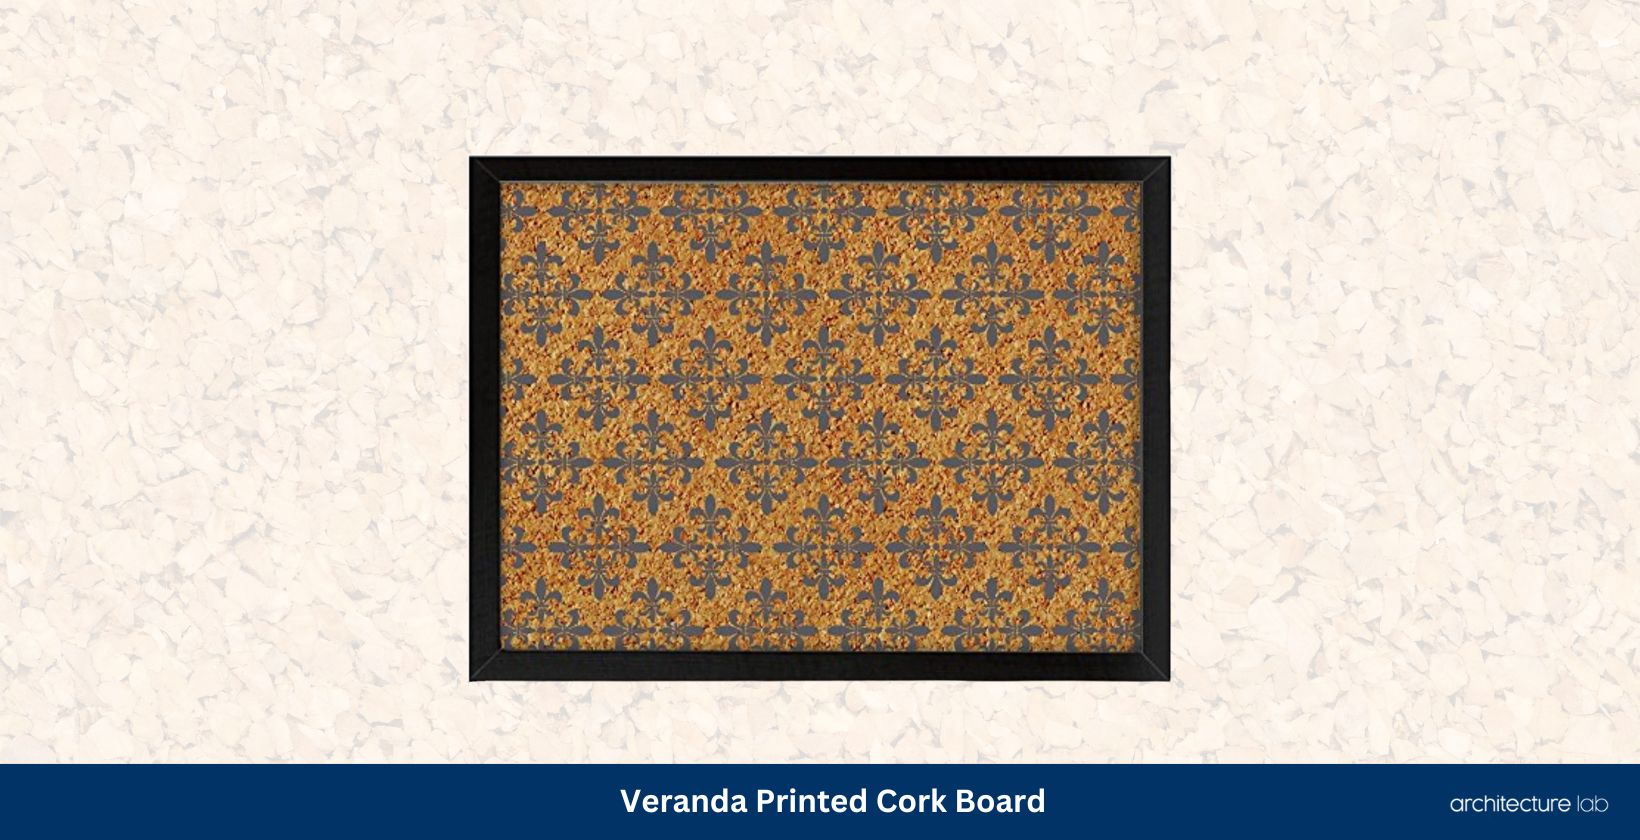 Veranda printed cork board